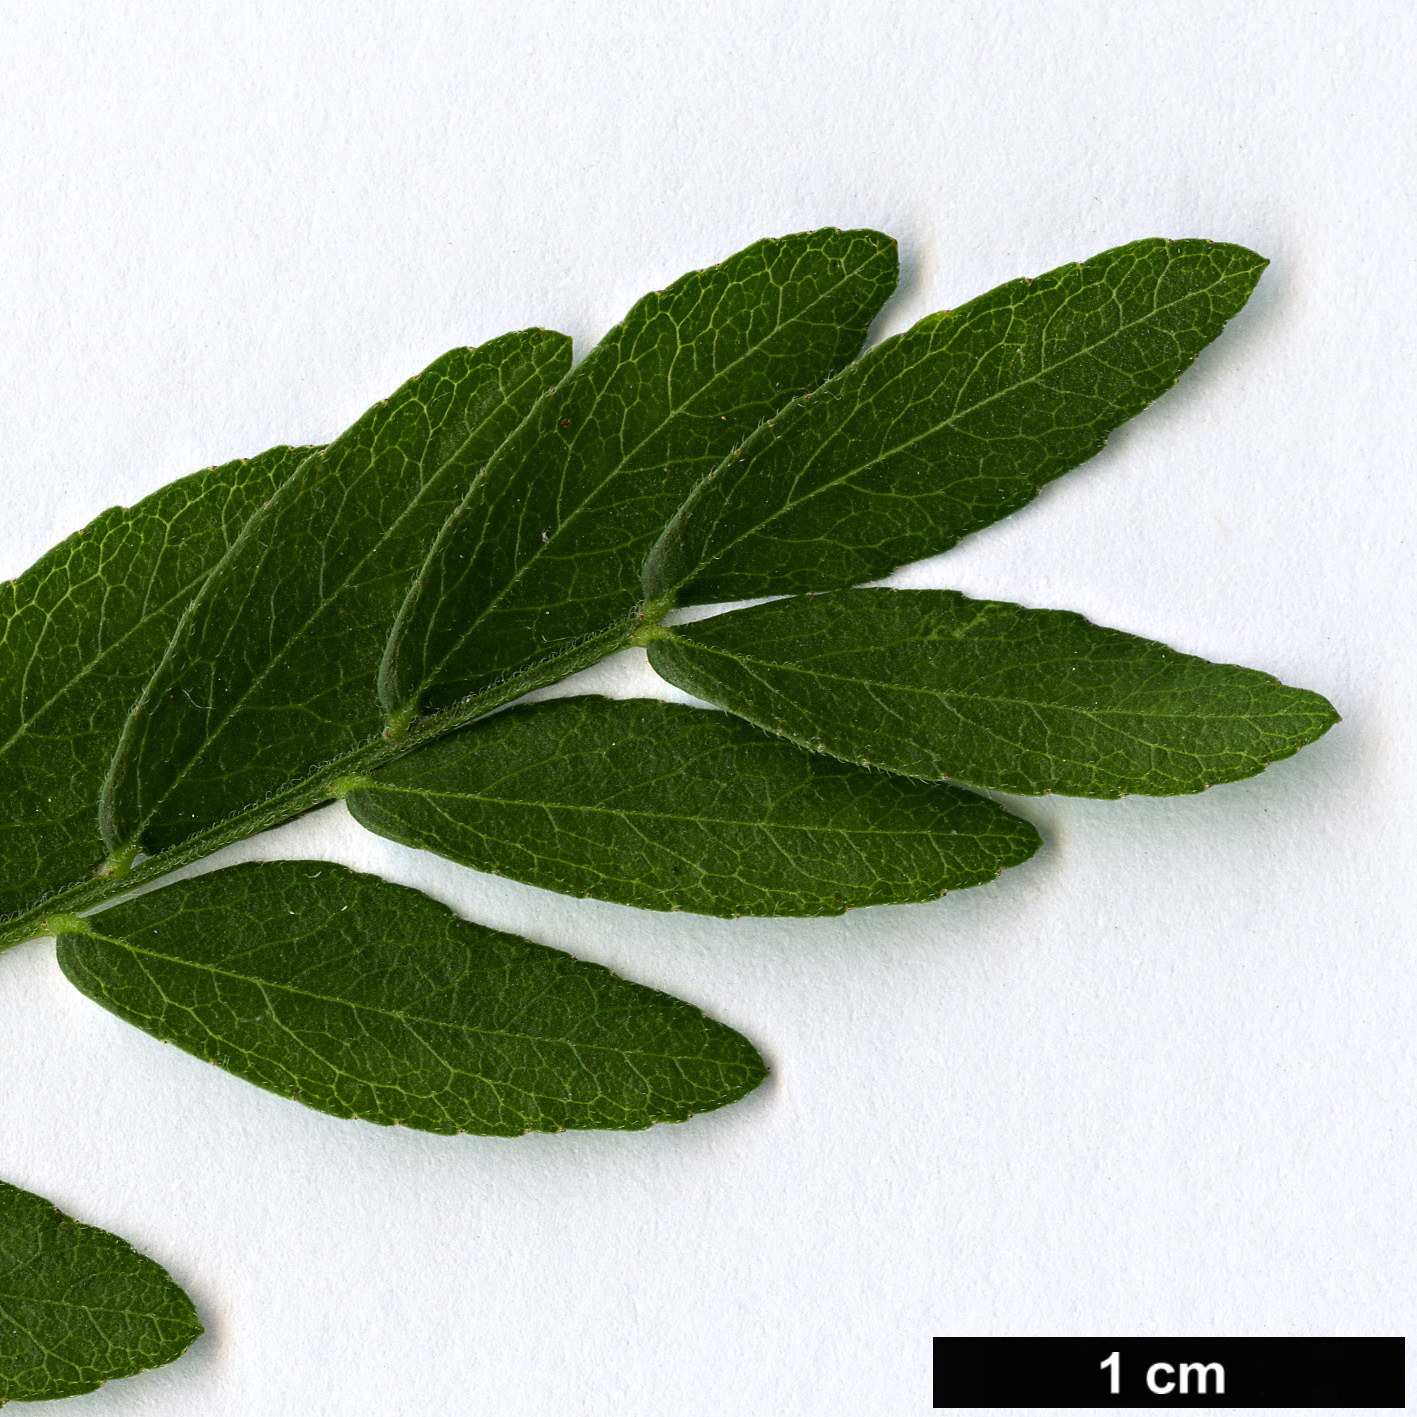 High resolution image: Family: Fabaceae - Genus: Gleditsia - Taxon: triacanthos